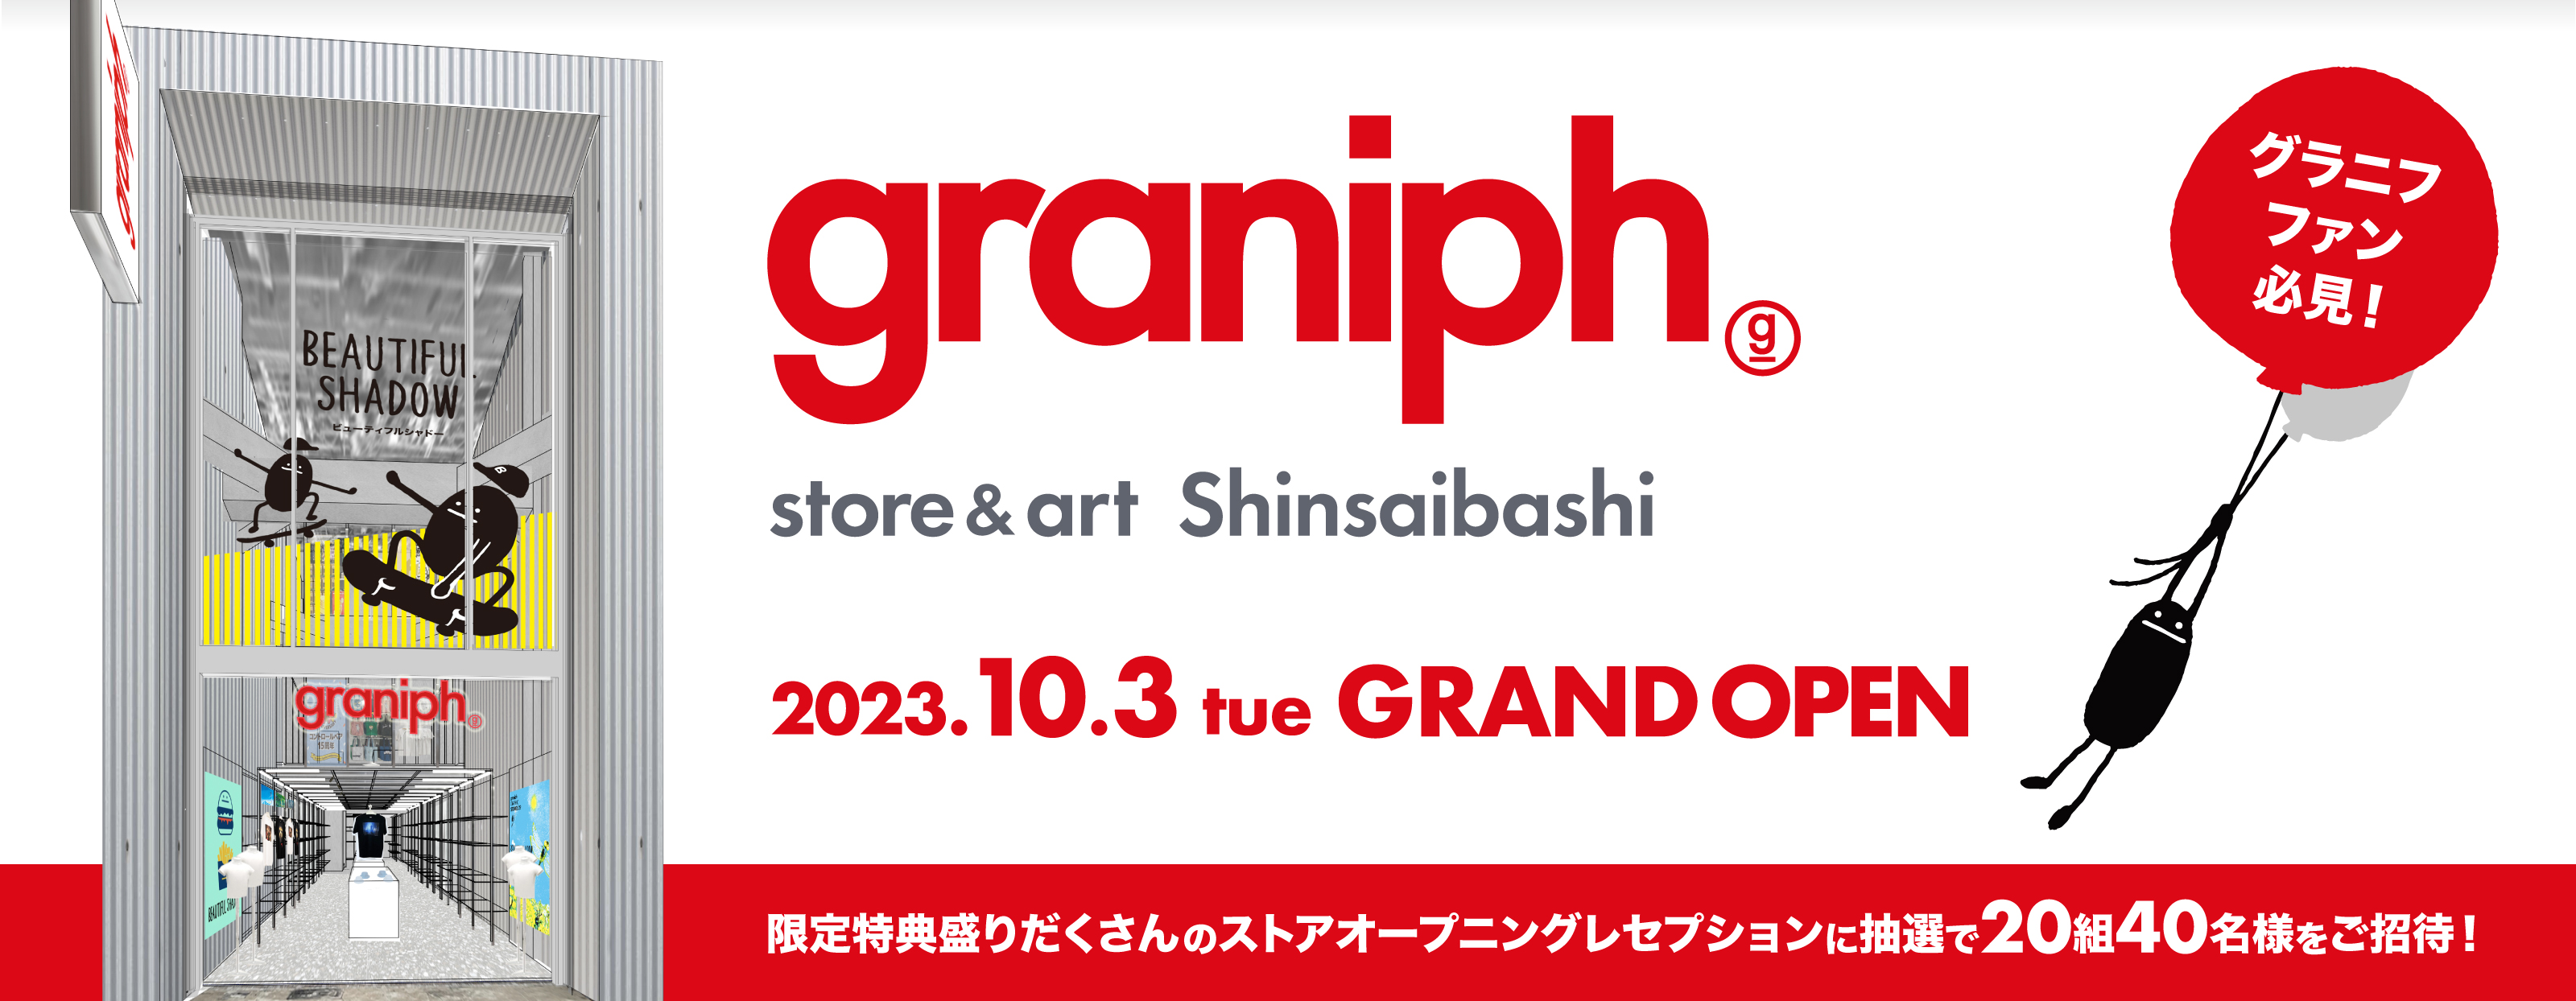 graniph store@art Shinsaibashi 2023.10.3 tue GRAND OPEN 限定特典盛りだくさんのストアオープニングレセプションに抽選で20組40名様をご招待！